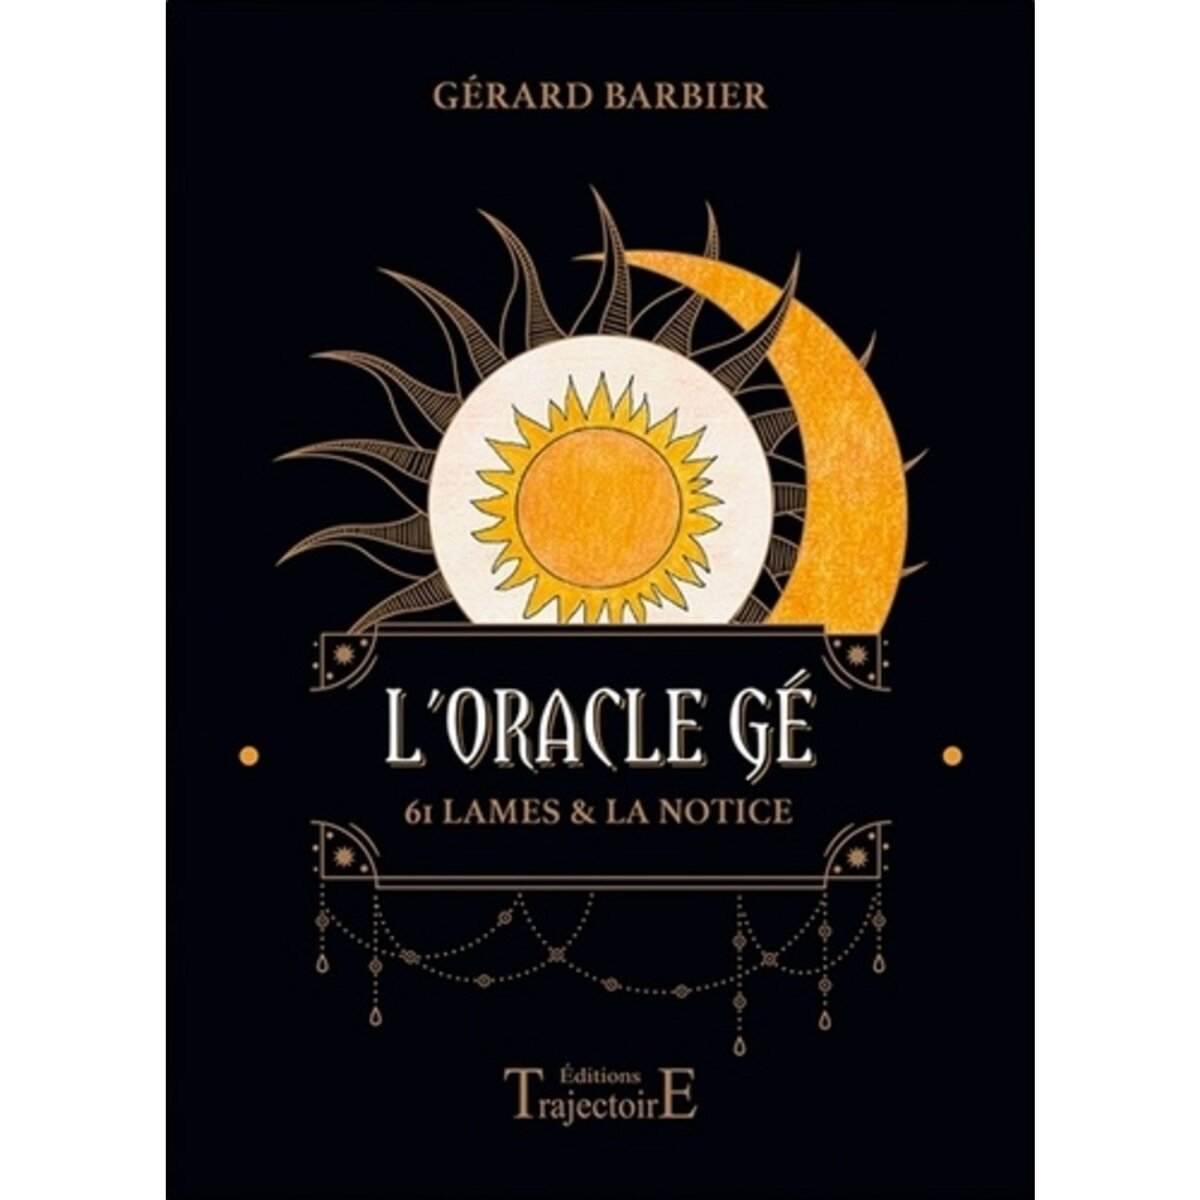  L'ORACLE GE. 61 LAMES & LA NOTICE, Barbier Gérard